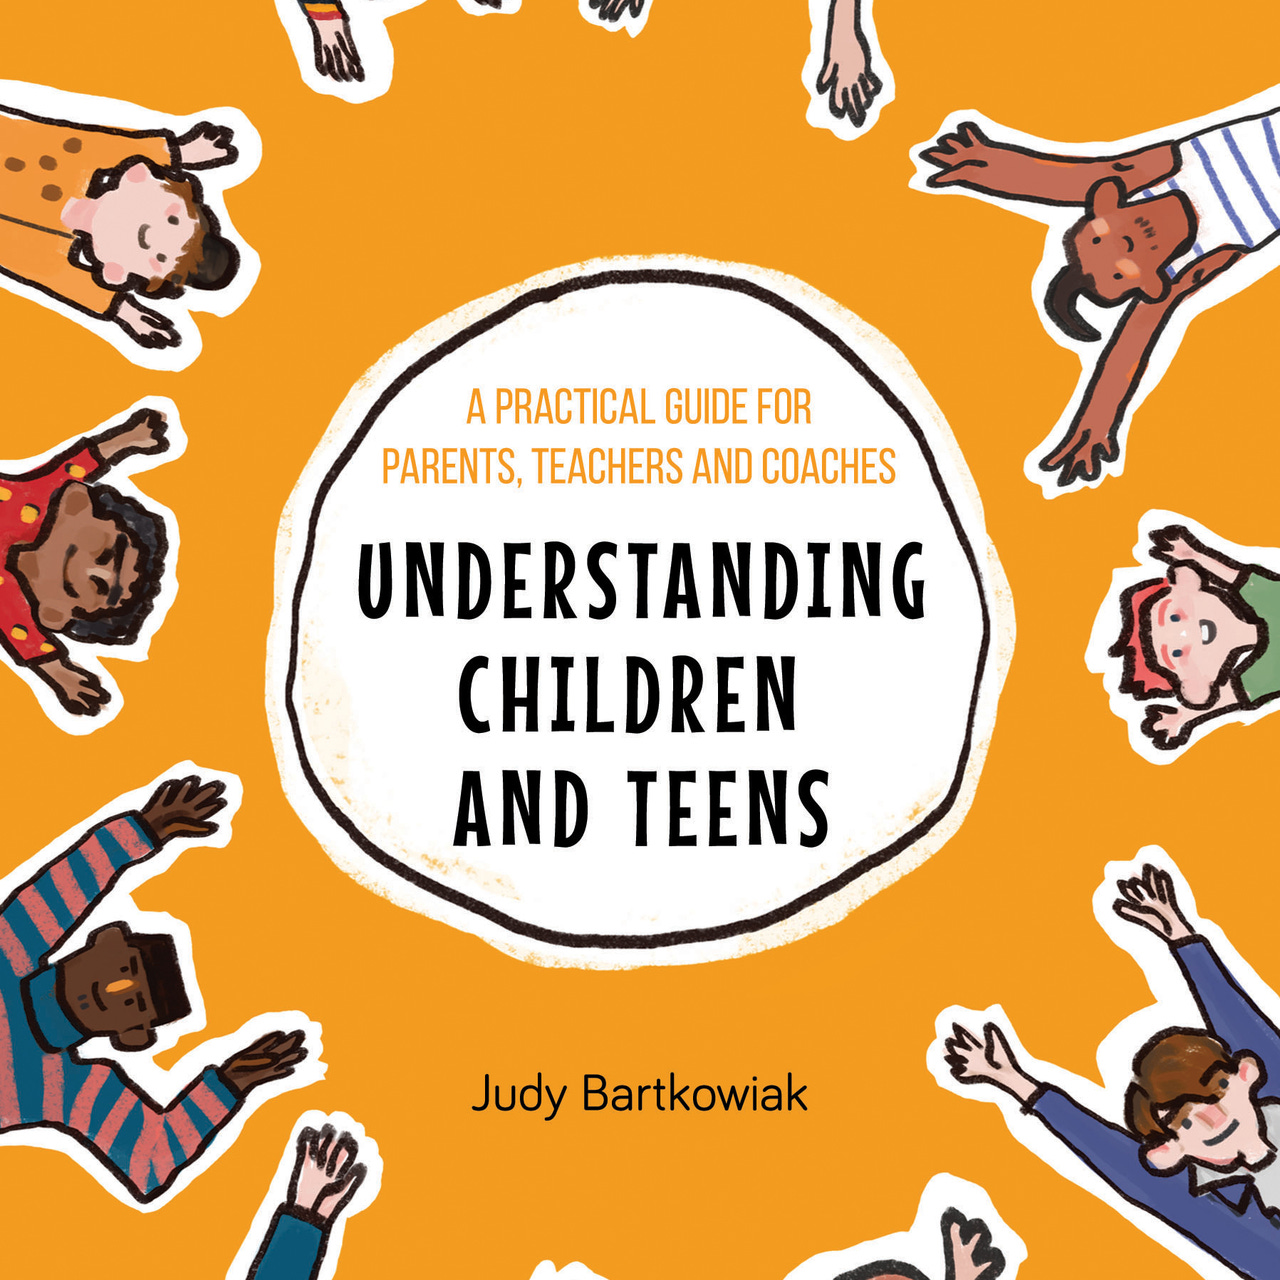 Artwork for Understanding children and teens by Judy Bartkowiak